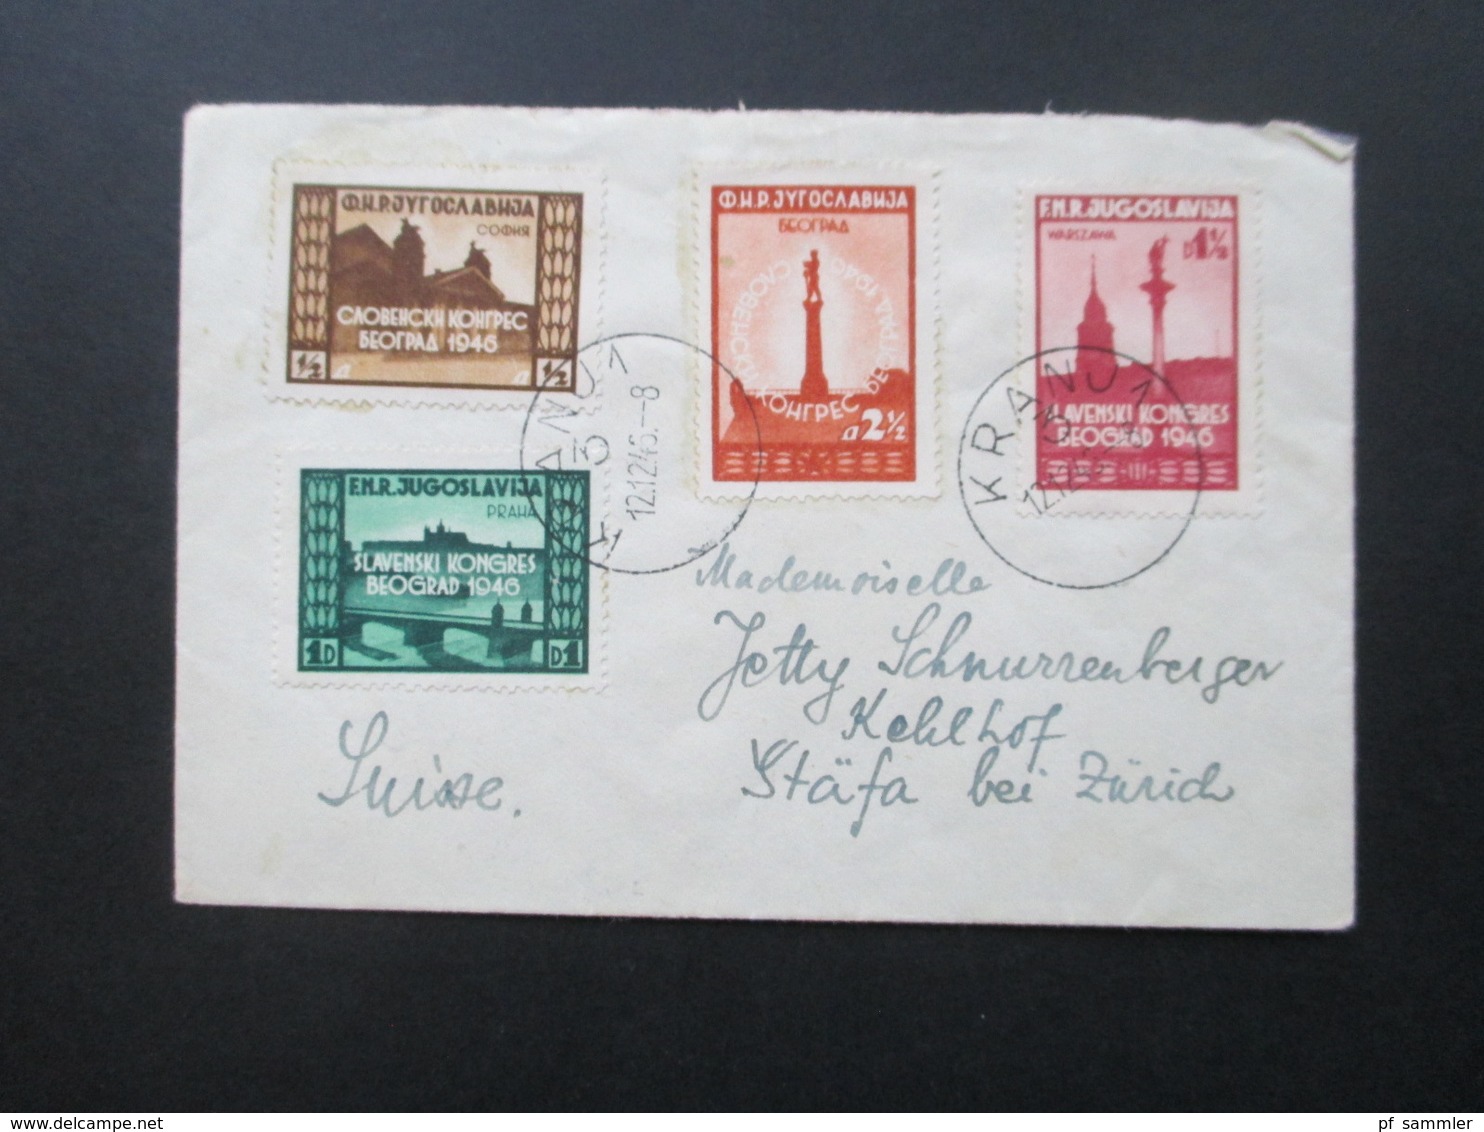 Jugoslawien 1946 Panslawischer Kongreß Nr. 507 - 510 Bedarfsbrief In Die Schweiz! Stempel Kranj 1 12.12.1946 - Briefe U. Dokumente